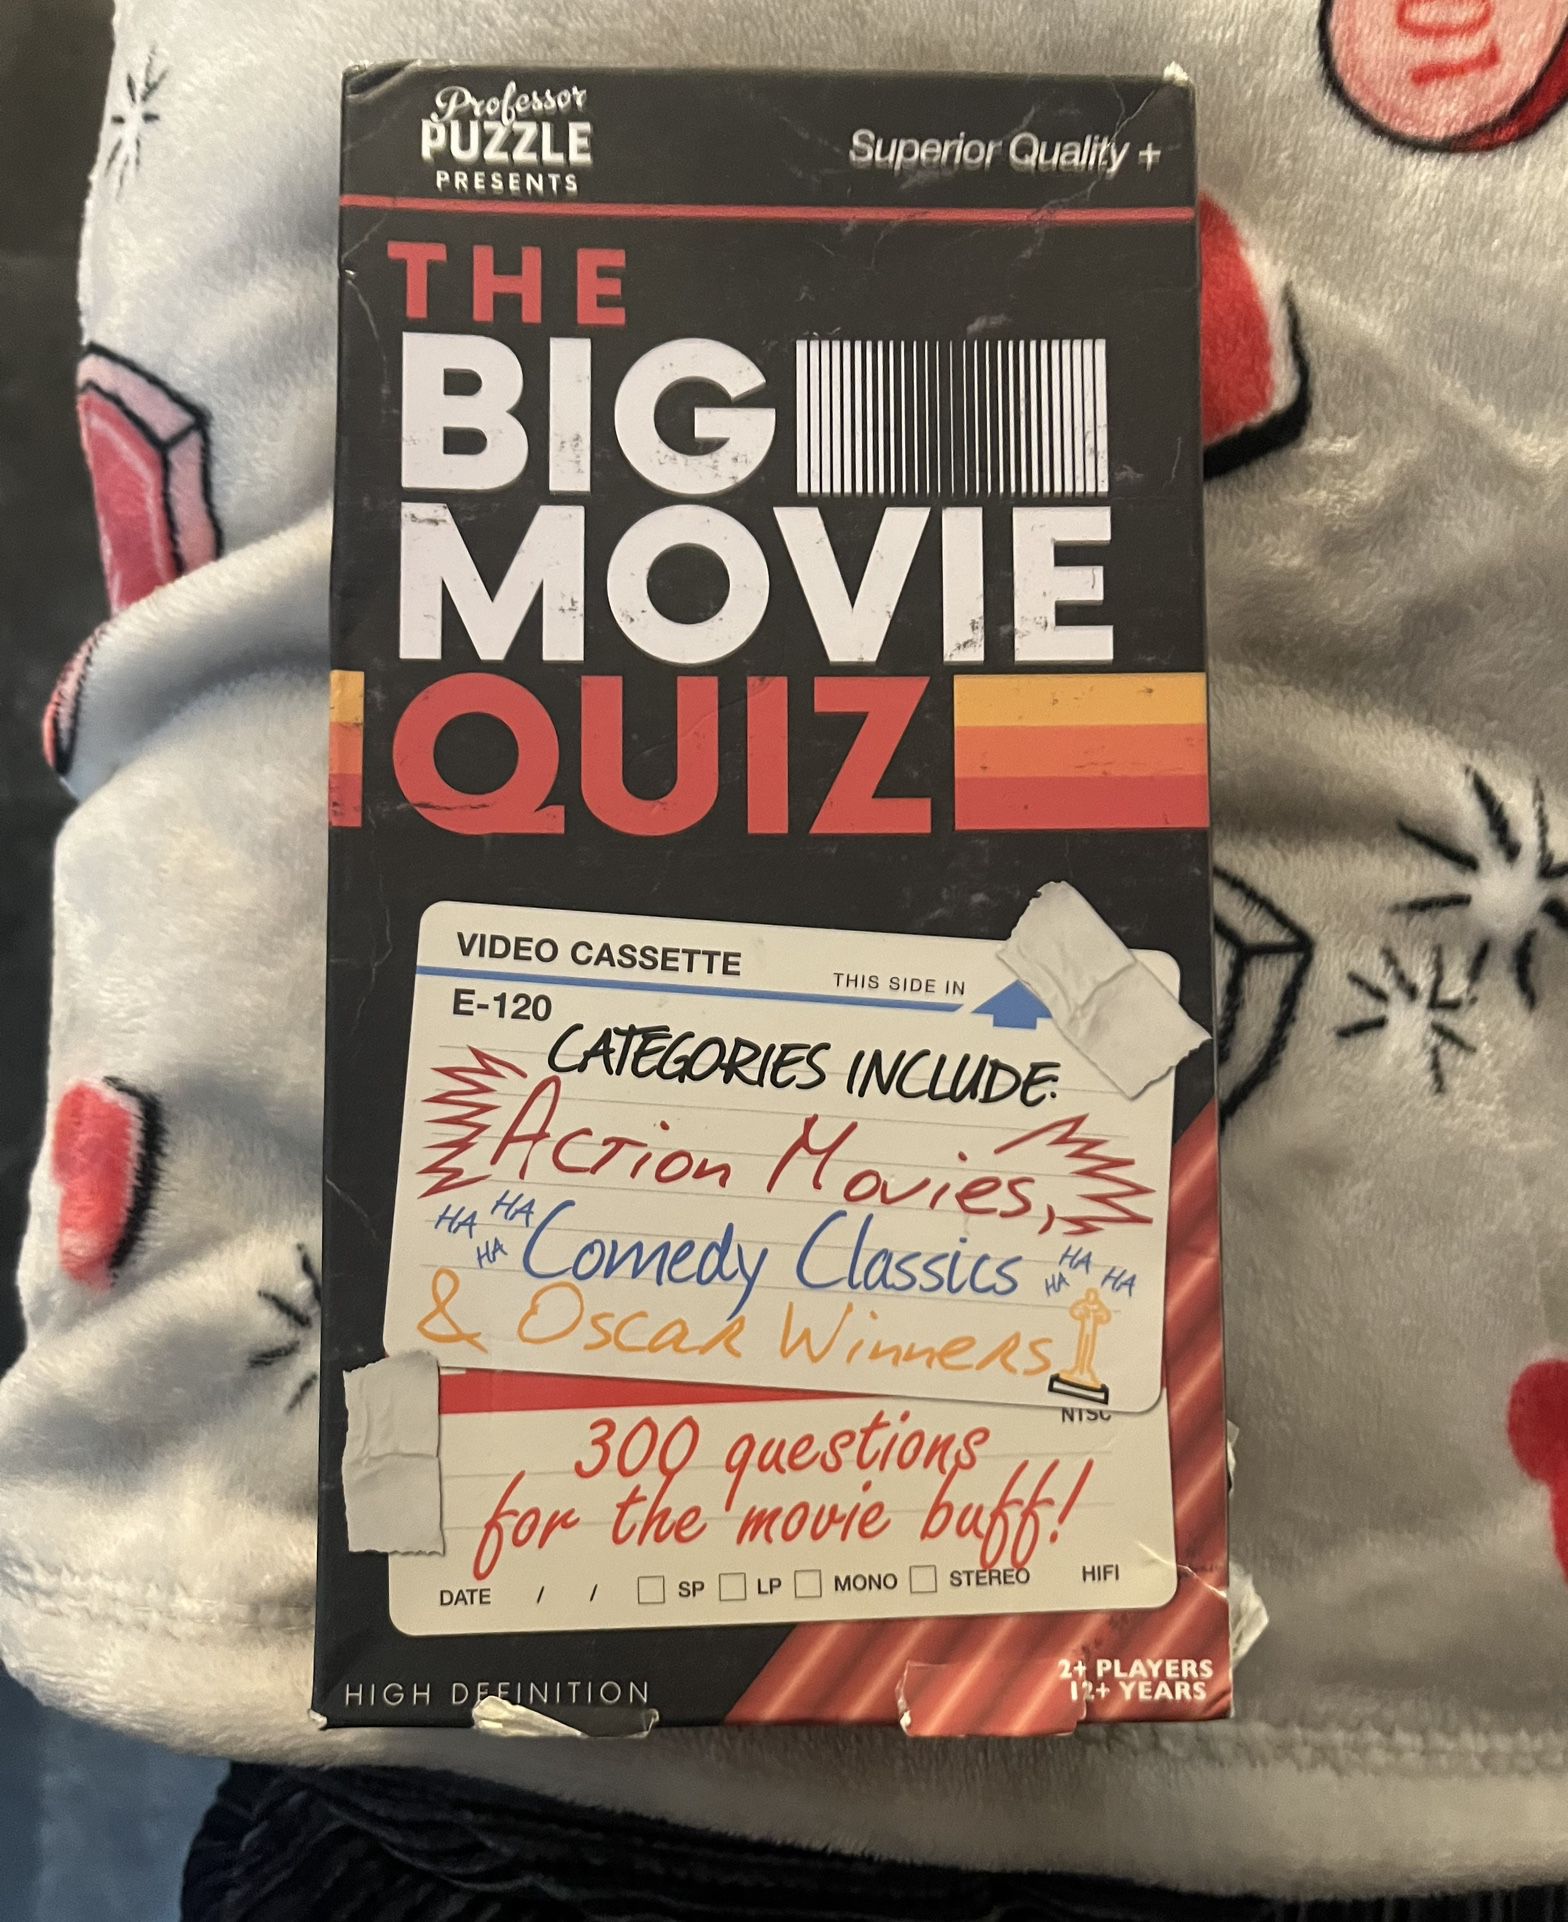 New! The Big Movie Quiz Game